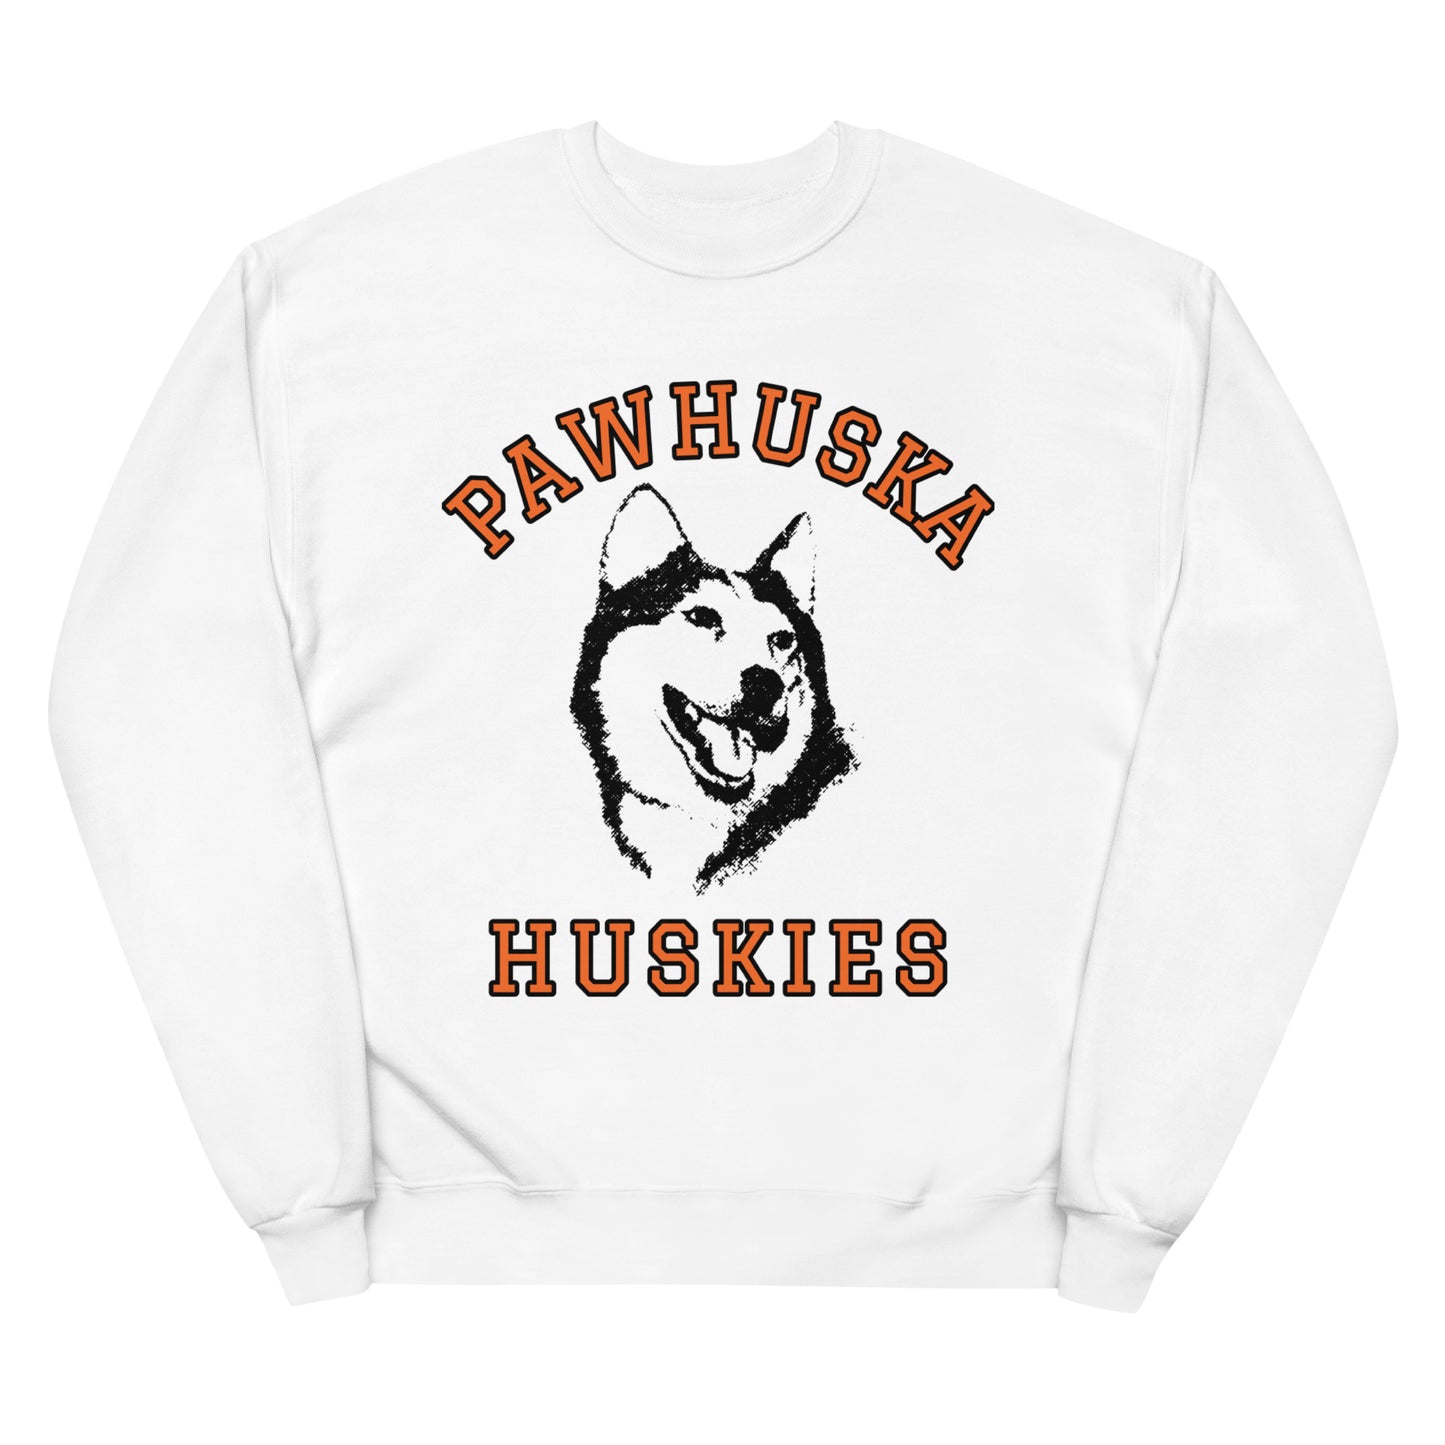 Huskies Unisex fleece sweatshirt available in 2 colors!